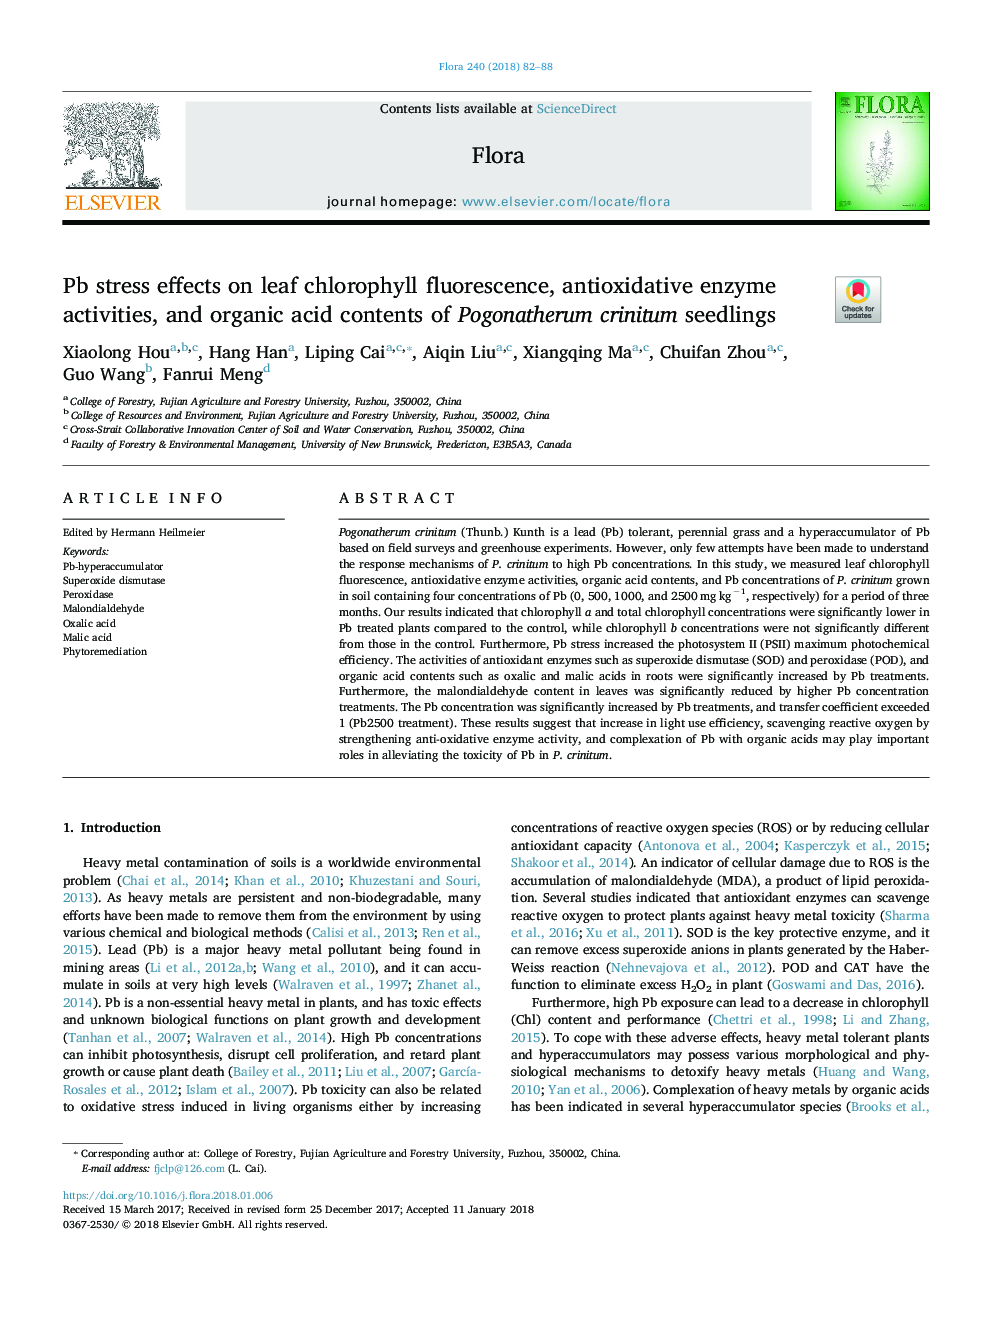 Pb stress effects on leaf chlorophyll fluorescence, antioxidative enzyme activities, and organic acid contents of Pogonatherum crinitum seedlings